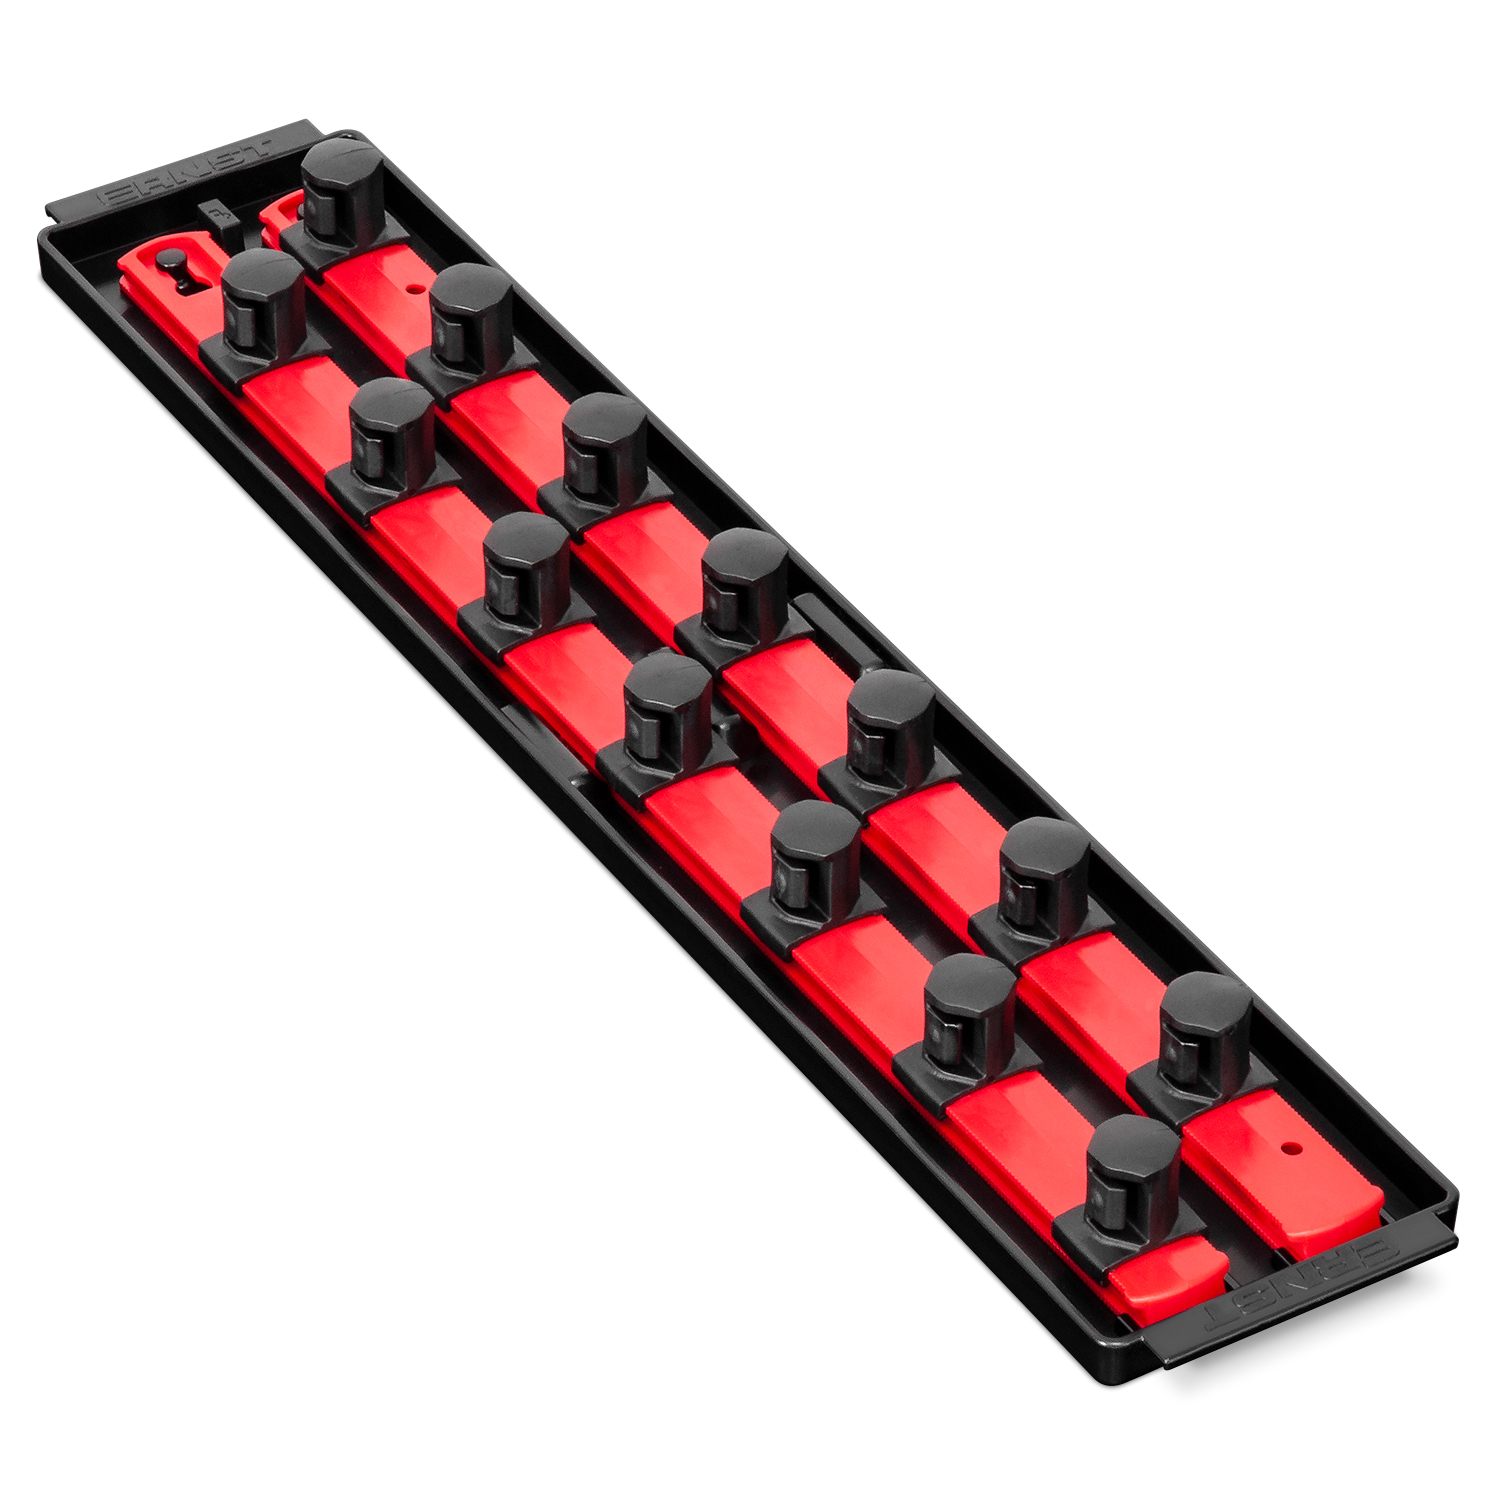 Ernst Manufacturing 8490 Socket Boss 3-Rail Multi-Drive Organizer 13" Red Storag 